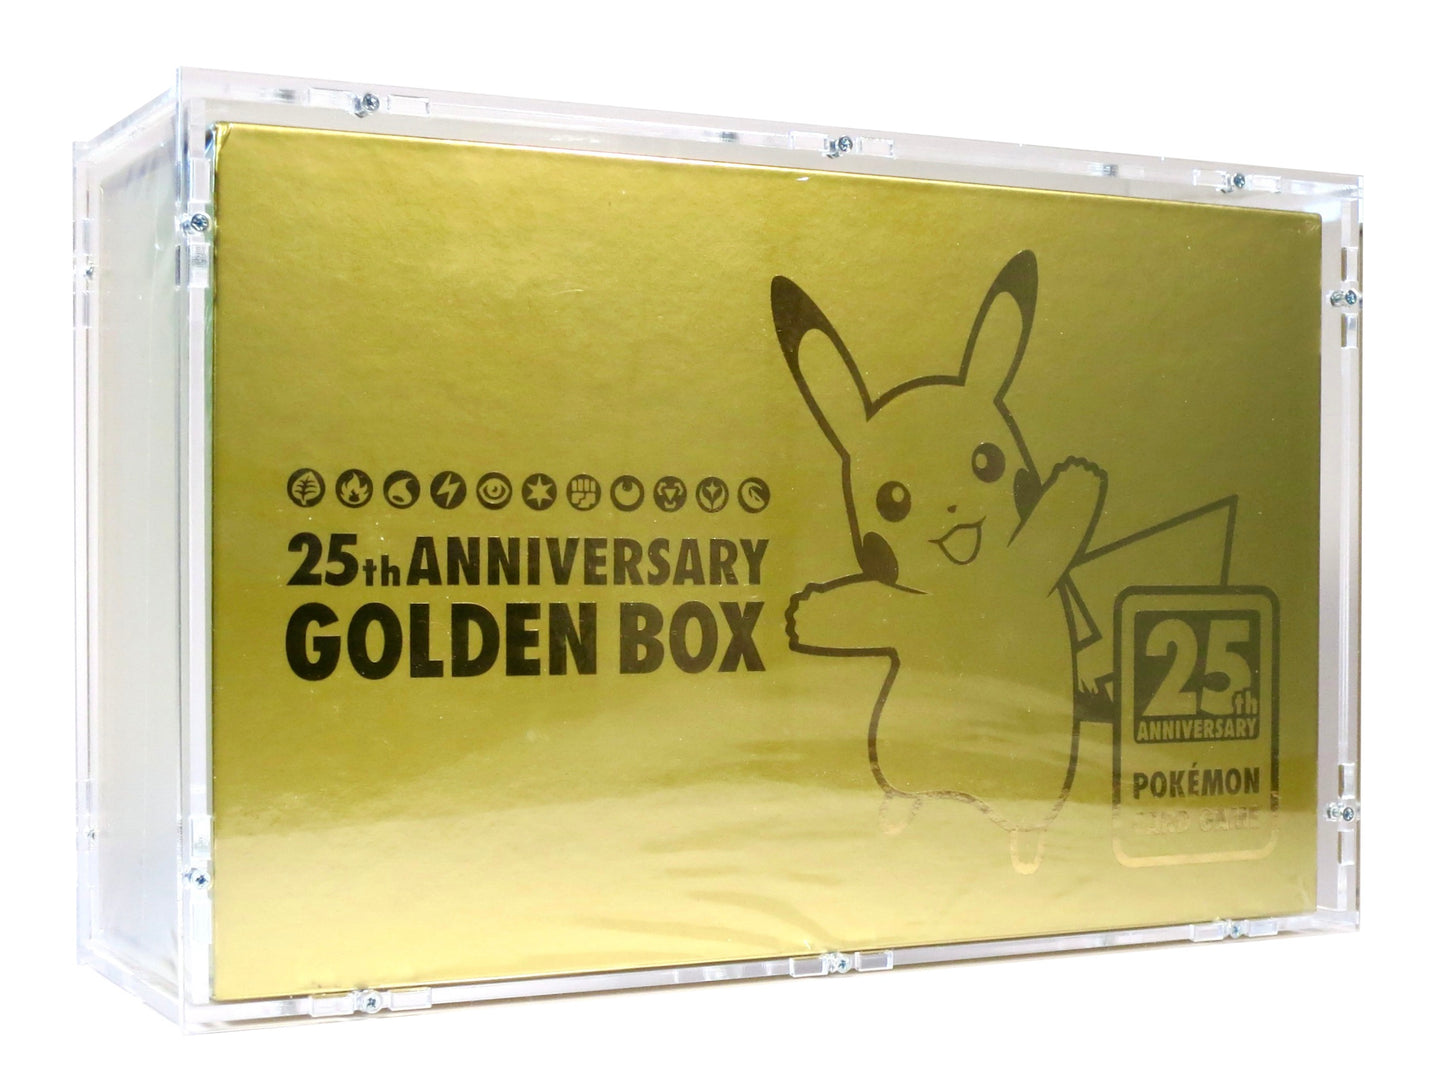 25th ANNIVERSARY GOLDEN BOX | nate-hospital.com